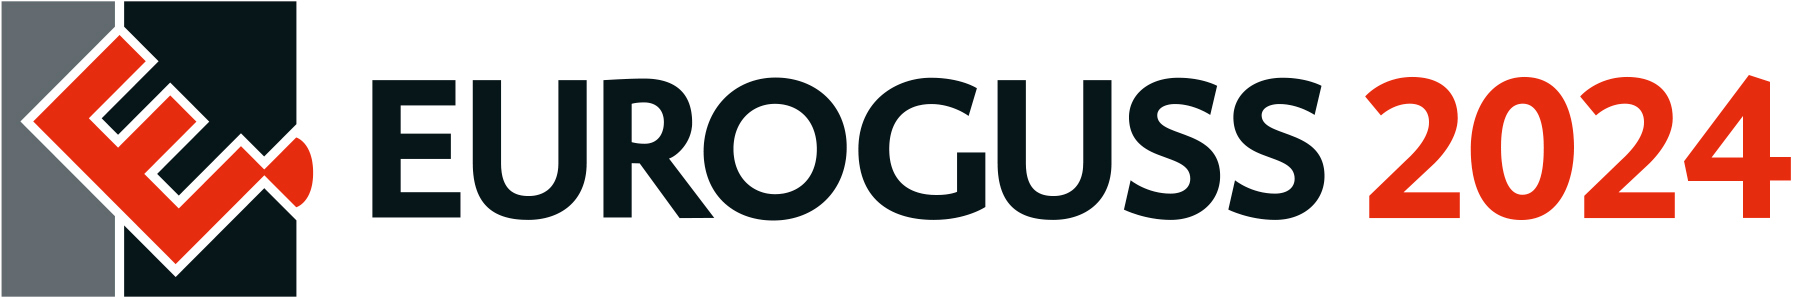 EUROGUSS 2024 Logo farbig positiv 300dpi RGB